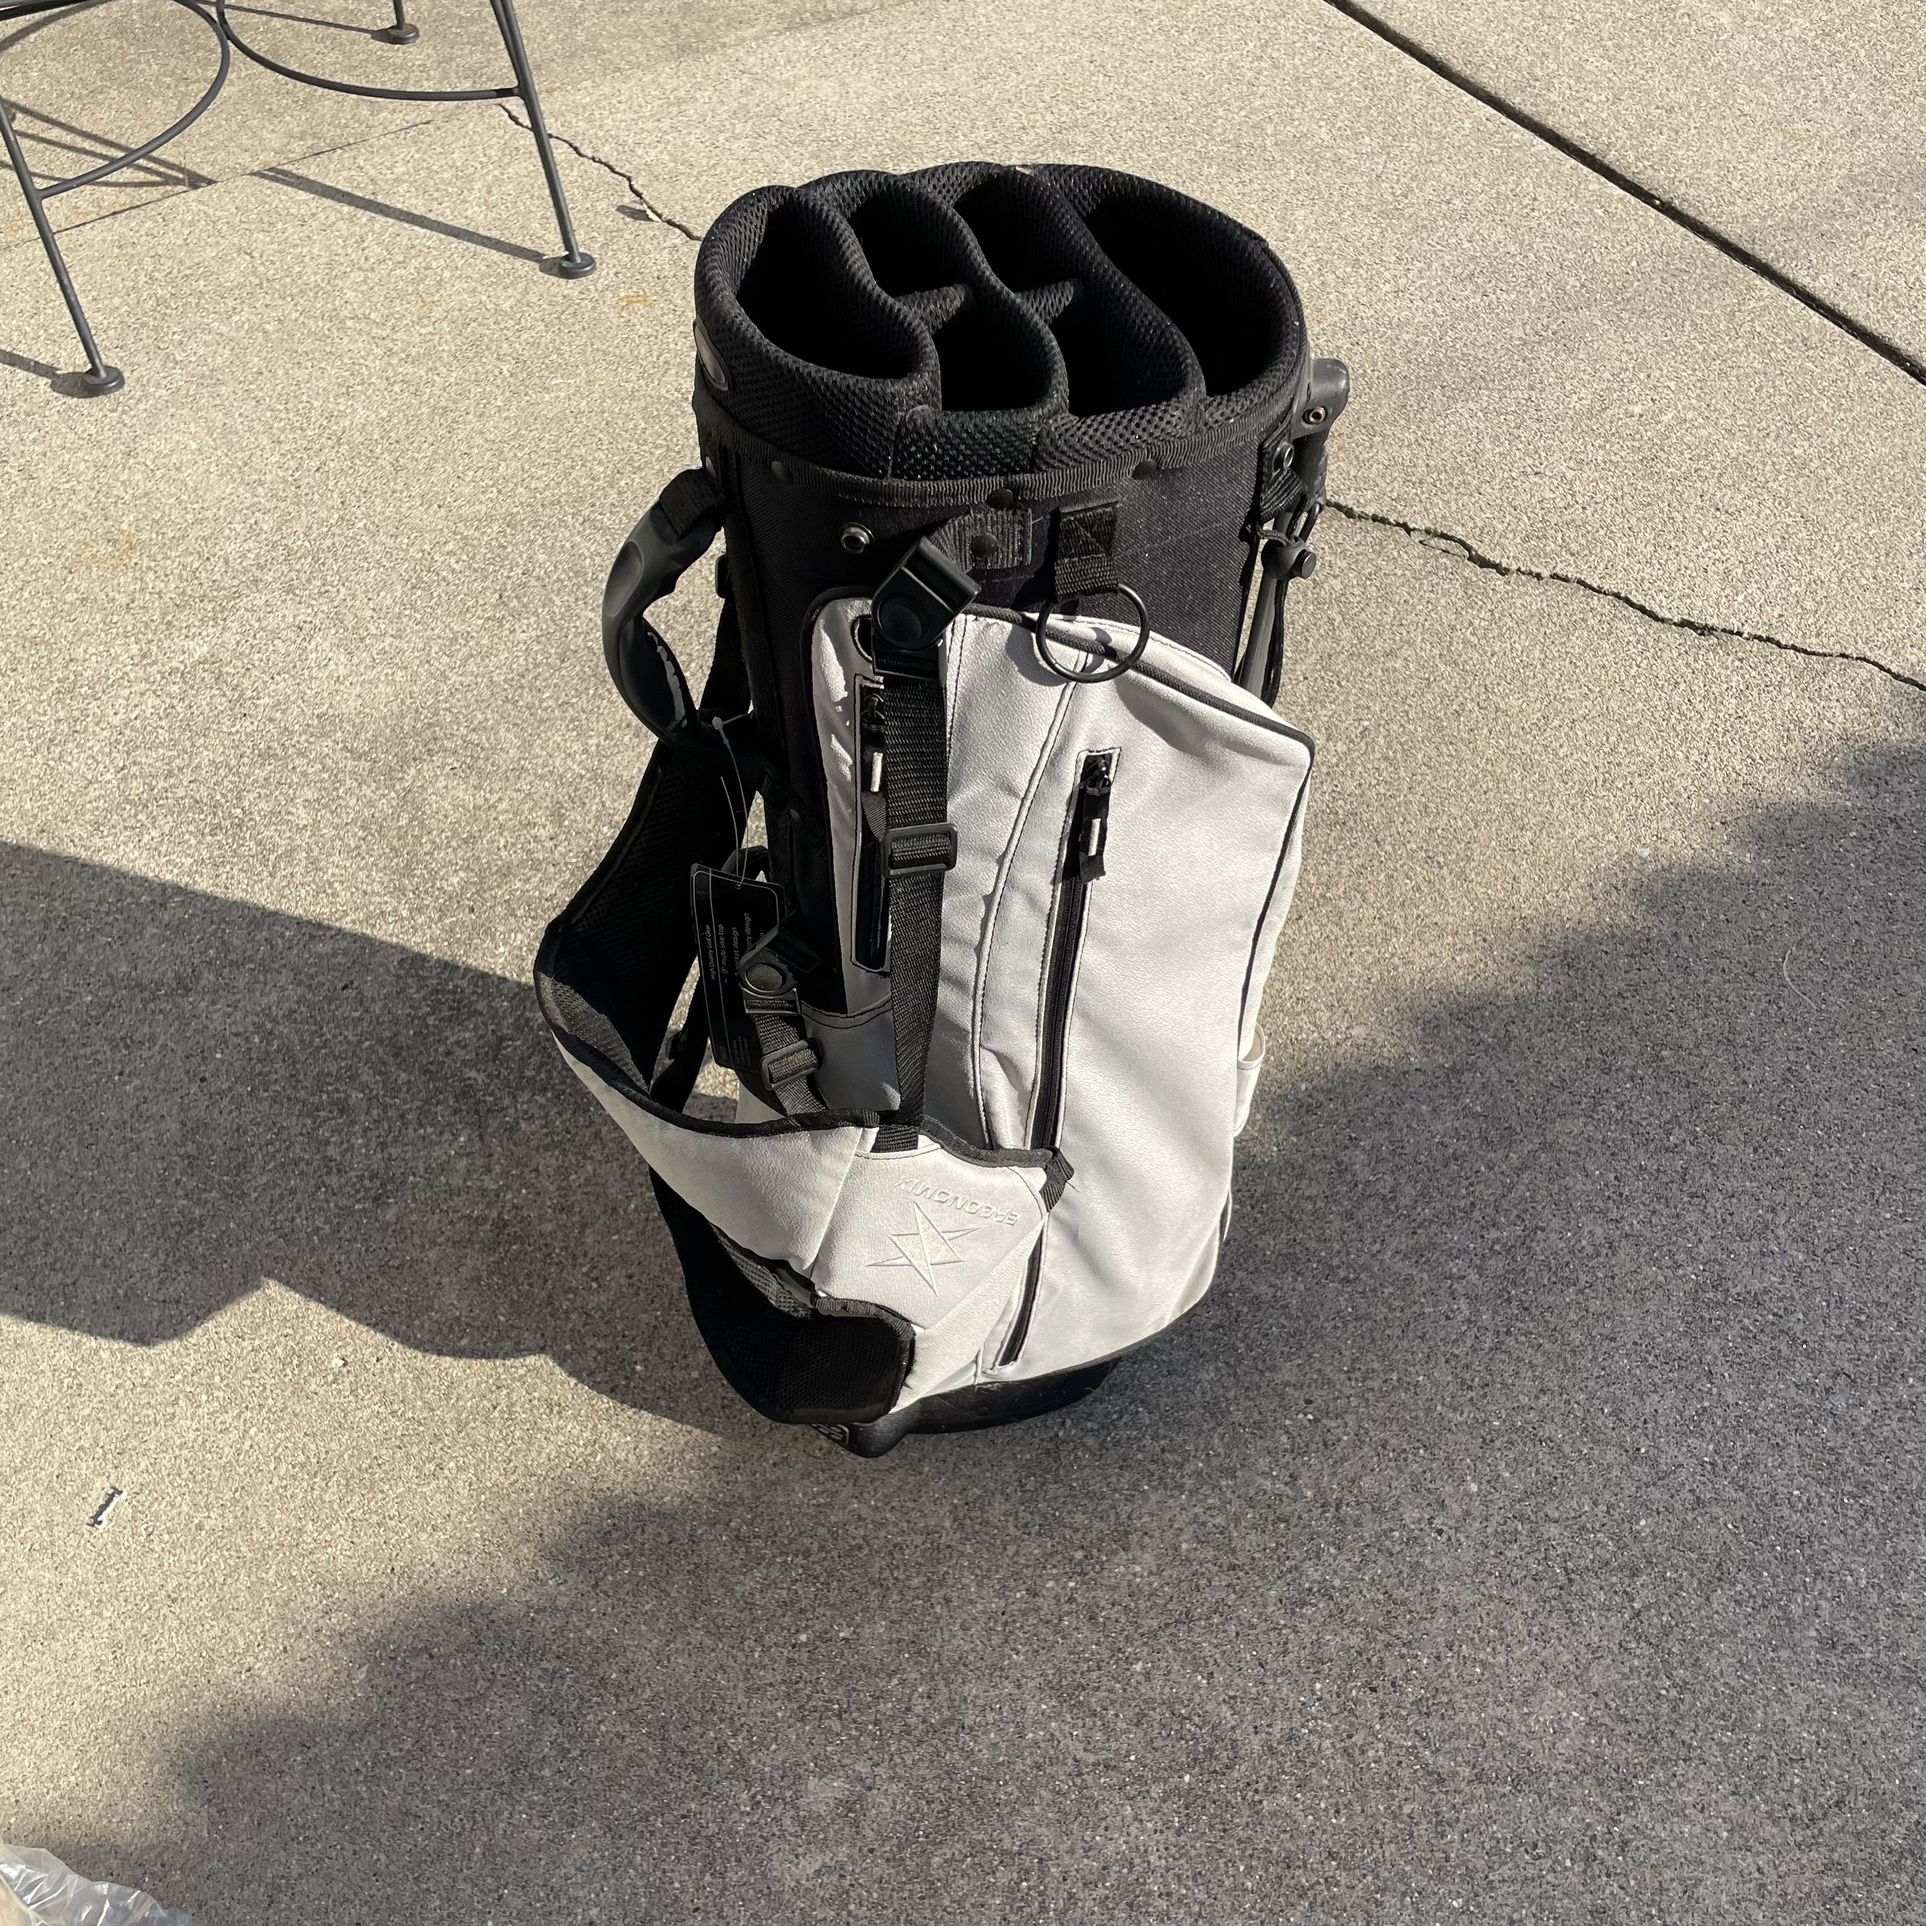 Golf Bag And Portable Stand